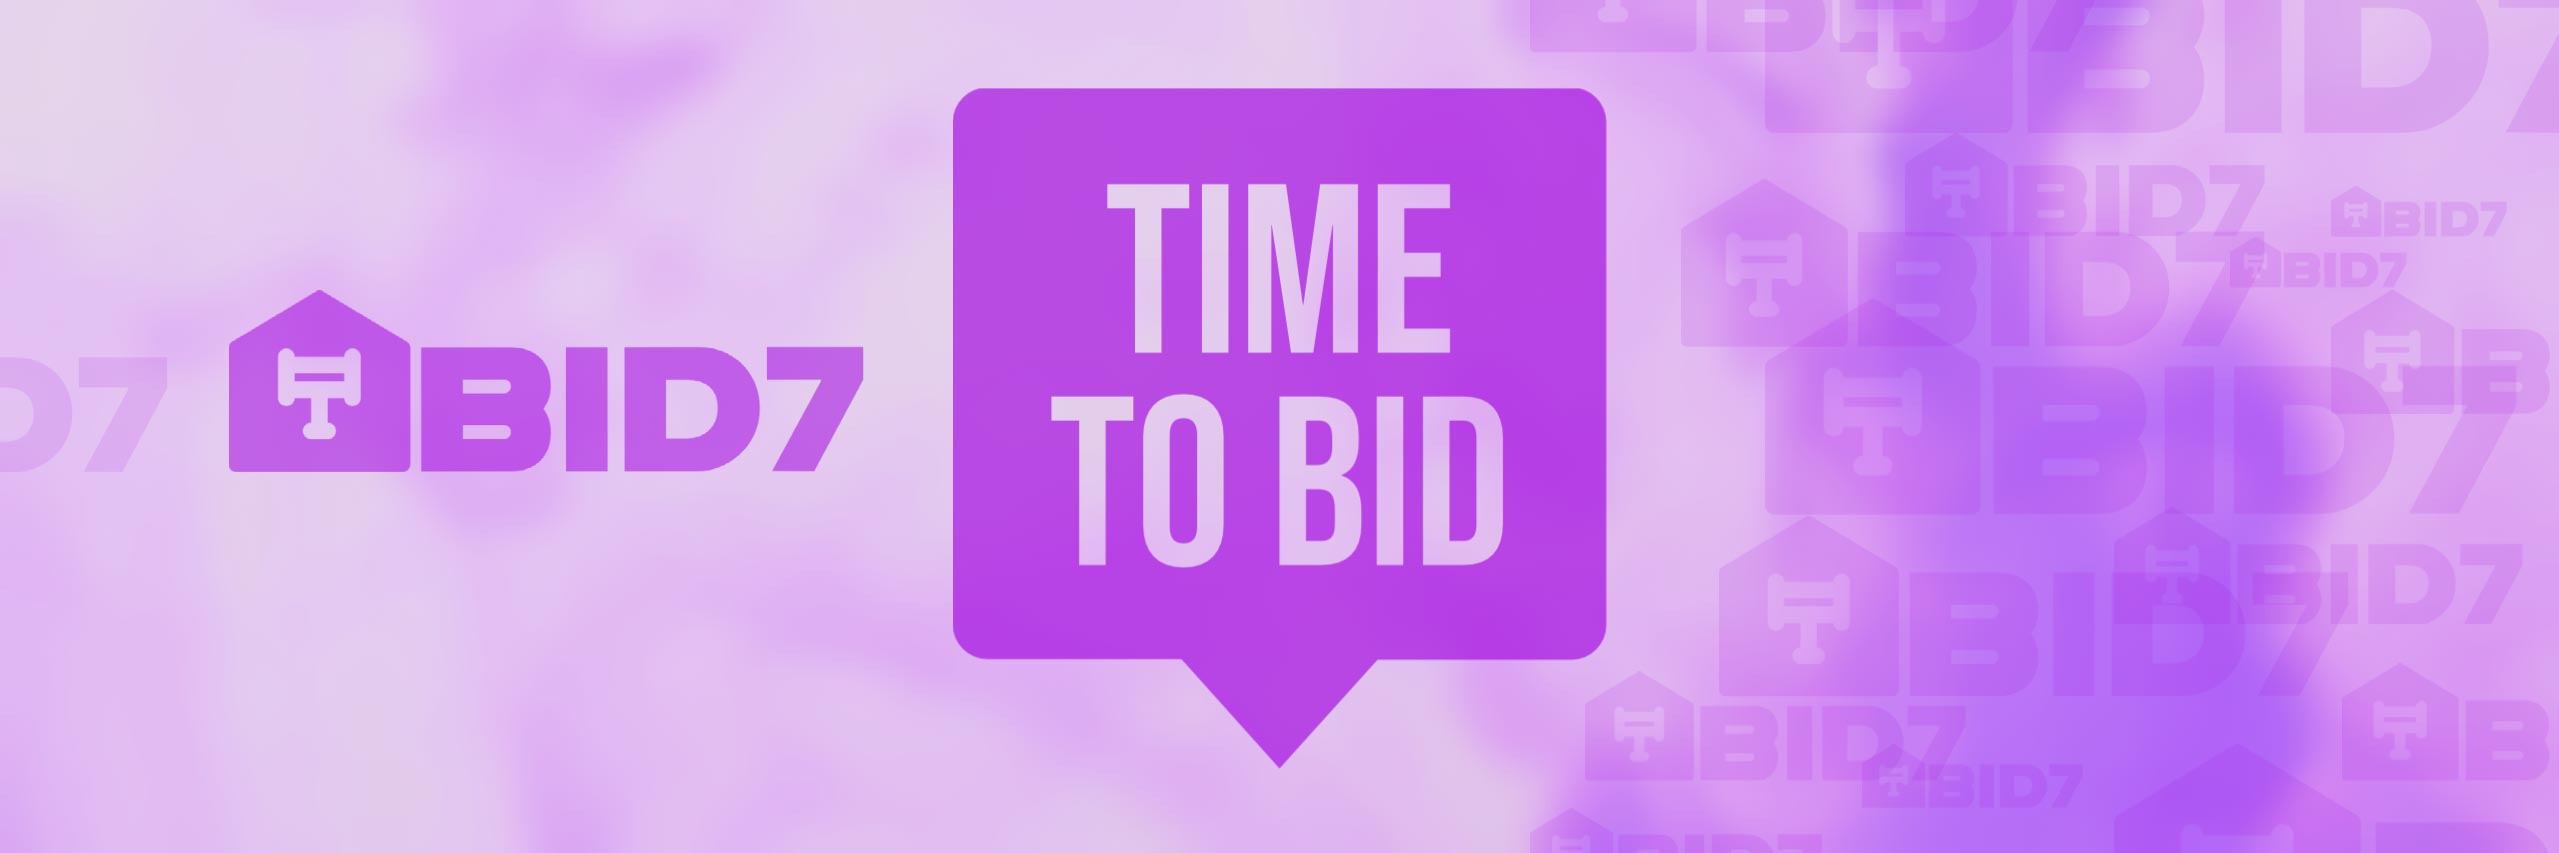 Bid7 banner: time to bid